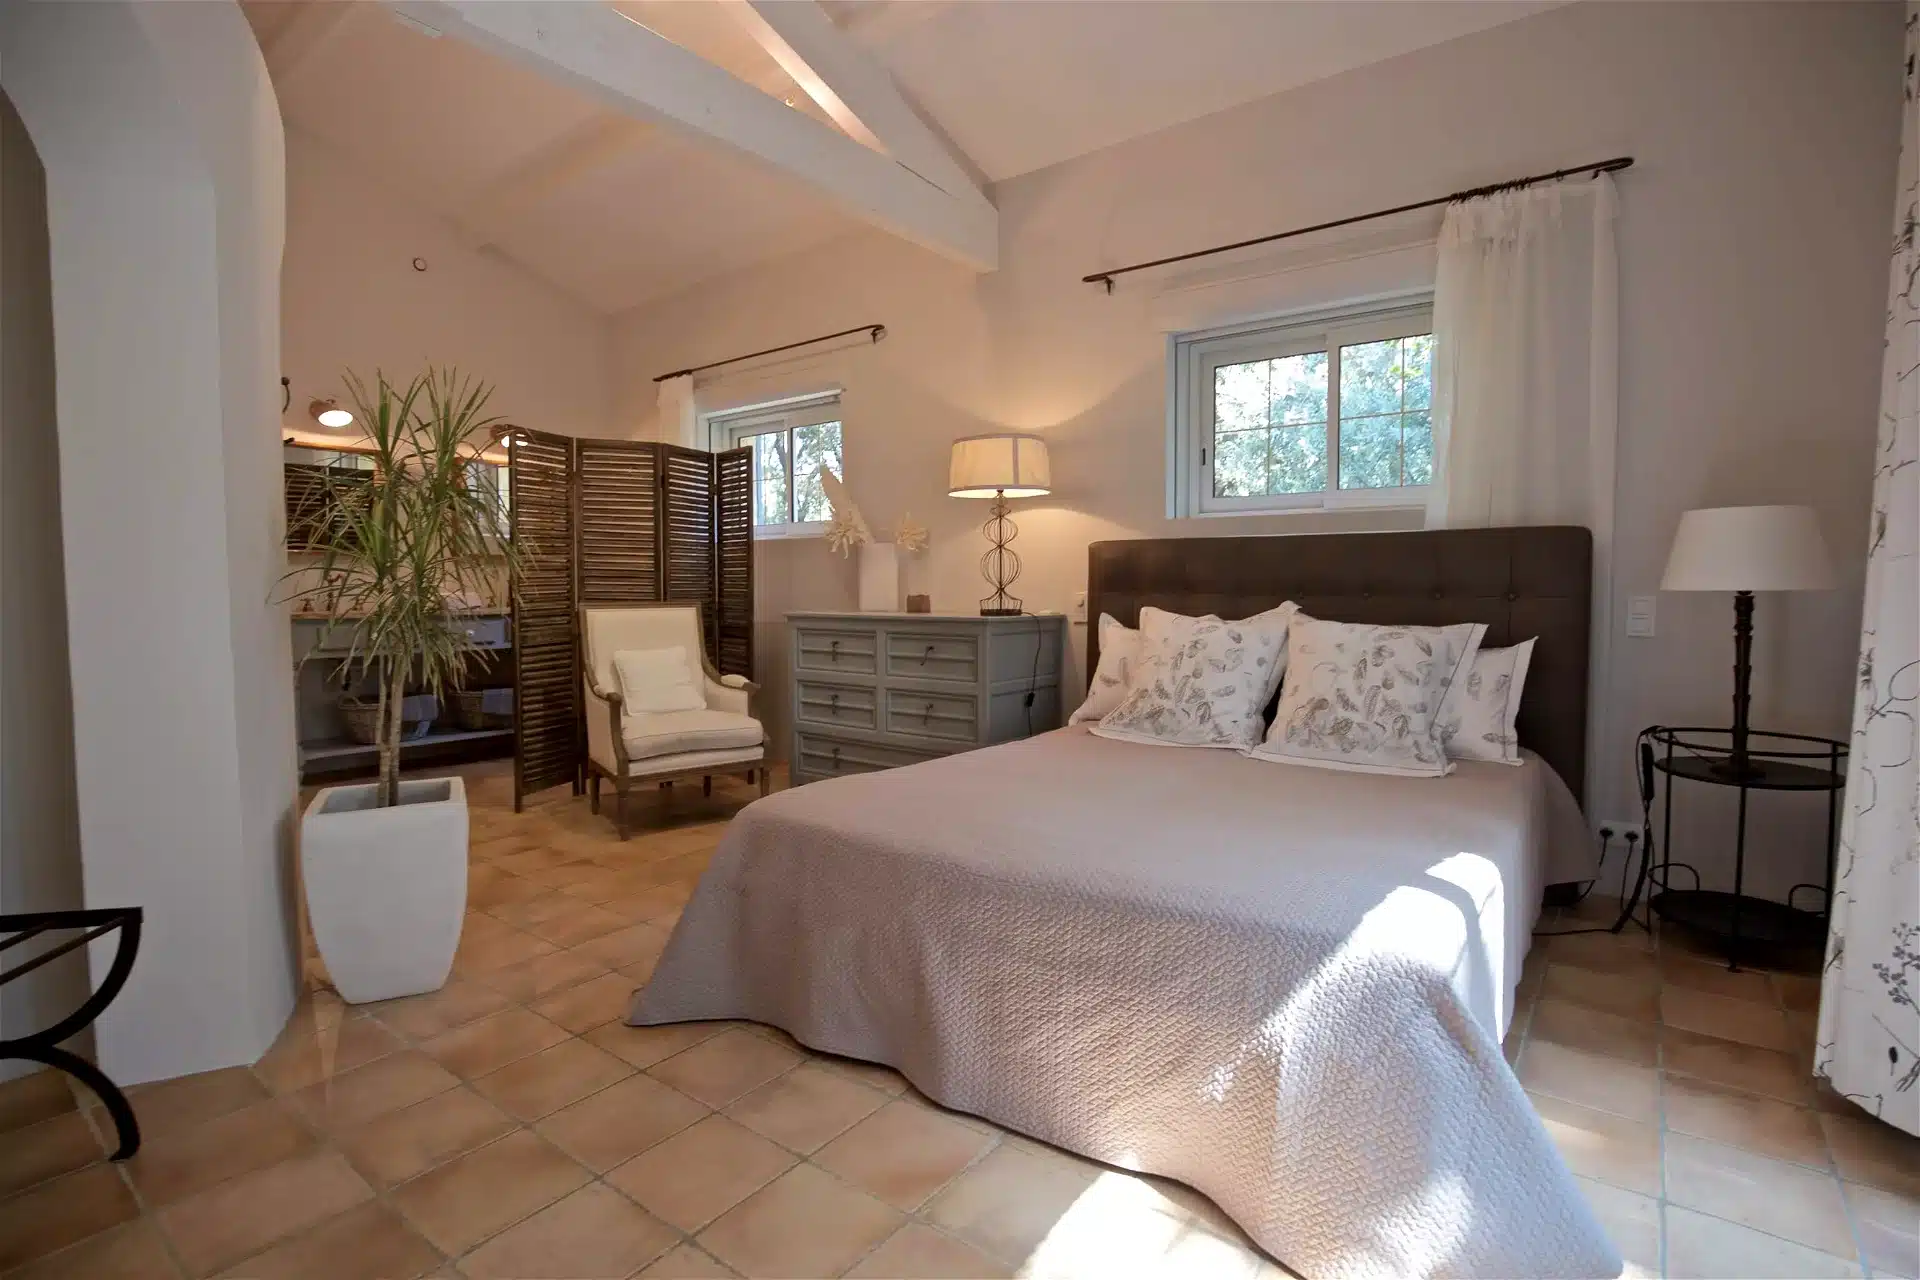 Provence luxury villa bedroom, fundraiser auction items, live auction items